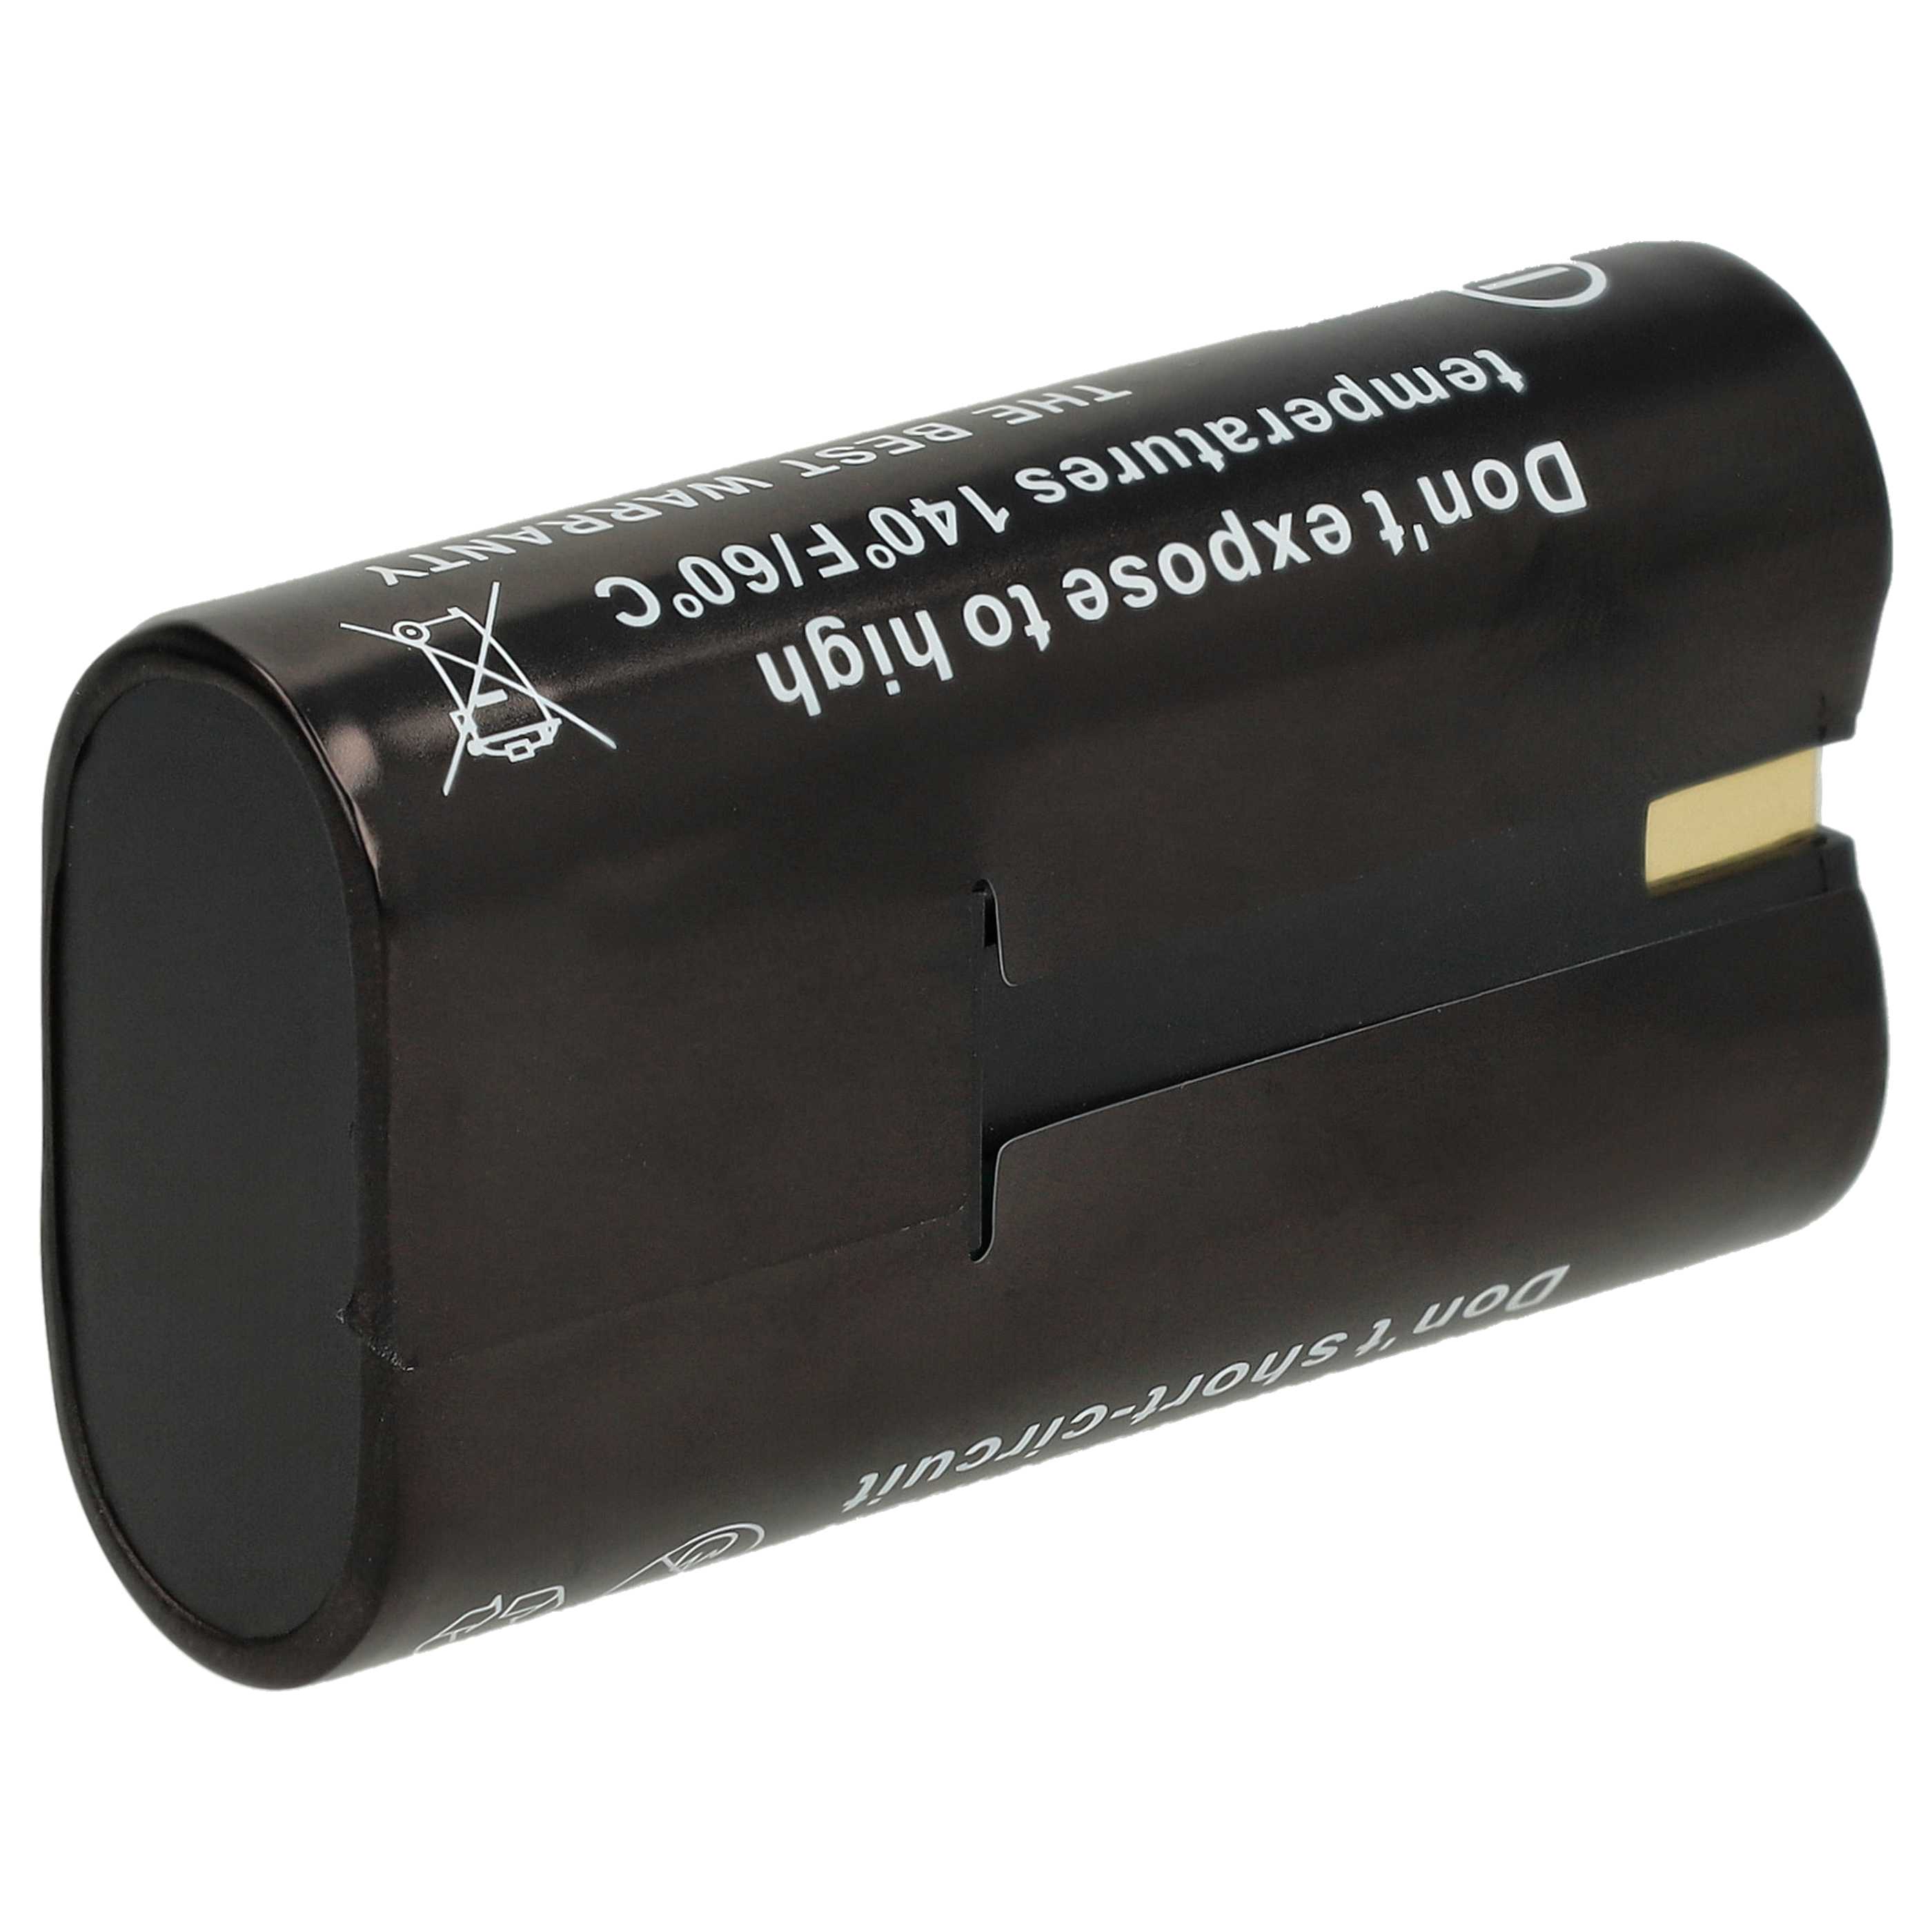 Batería reemplaza Kodak Klic-8000, RB50 para cámara Jay-Tech - 1520 mAh 3,6 V Li-Ion